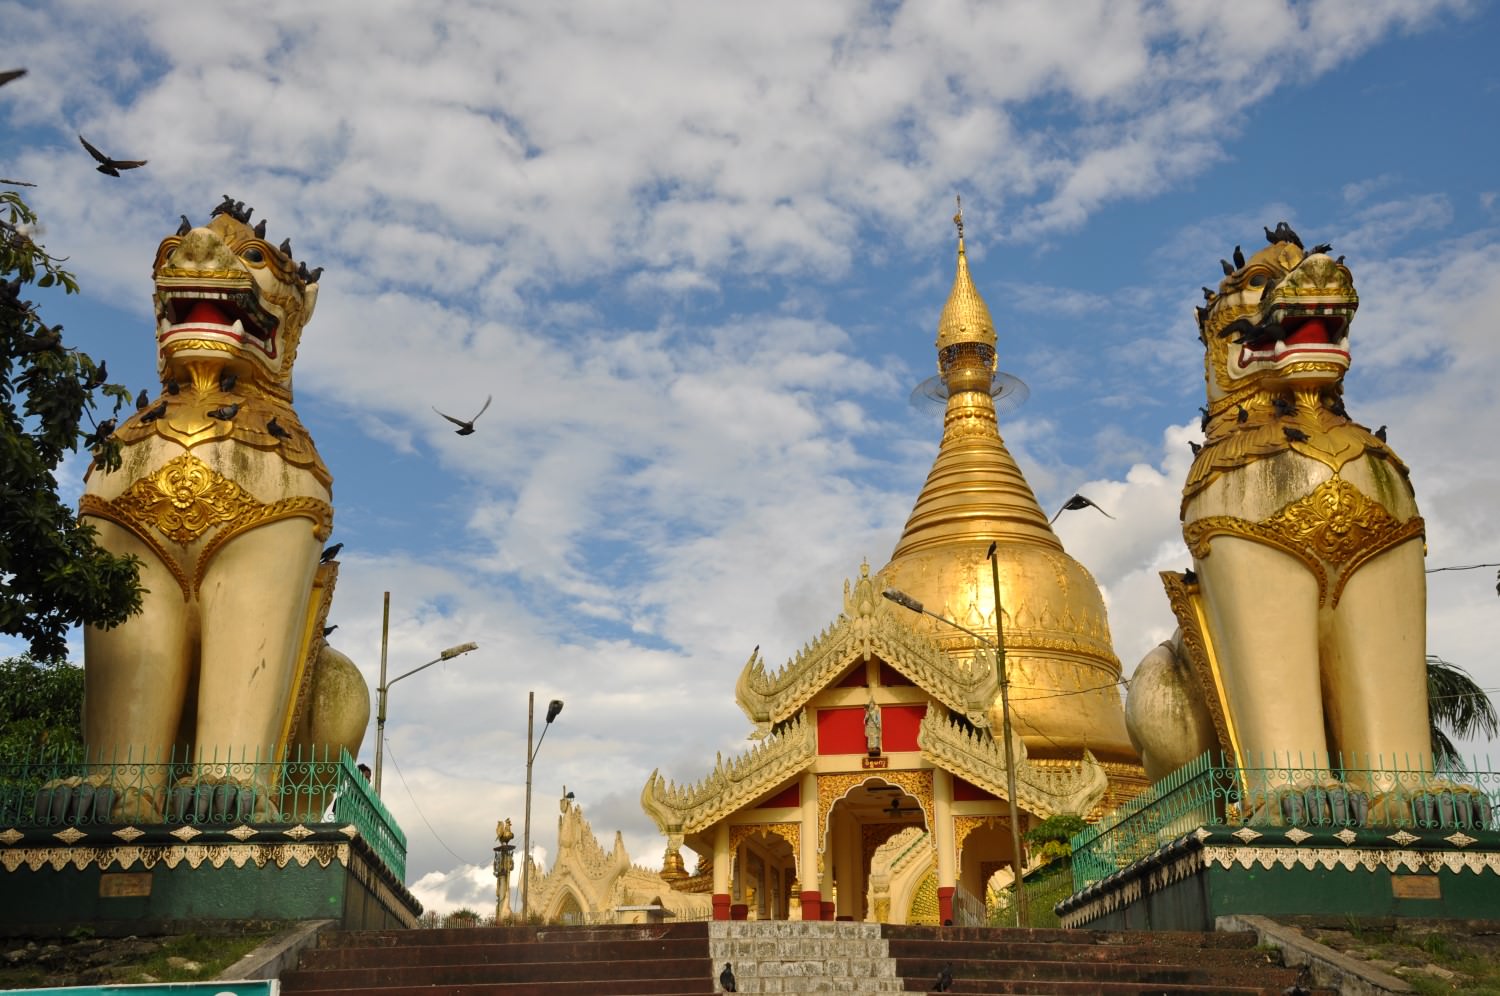 Yangon - Shwedagon paya